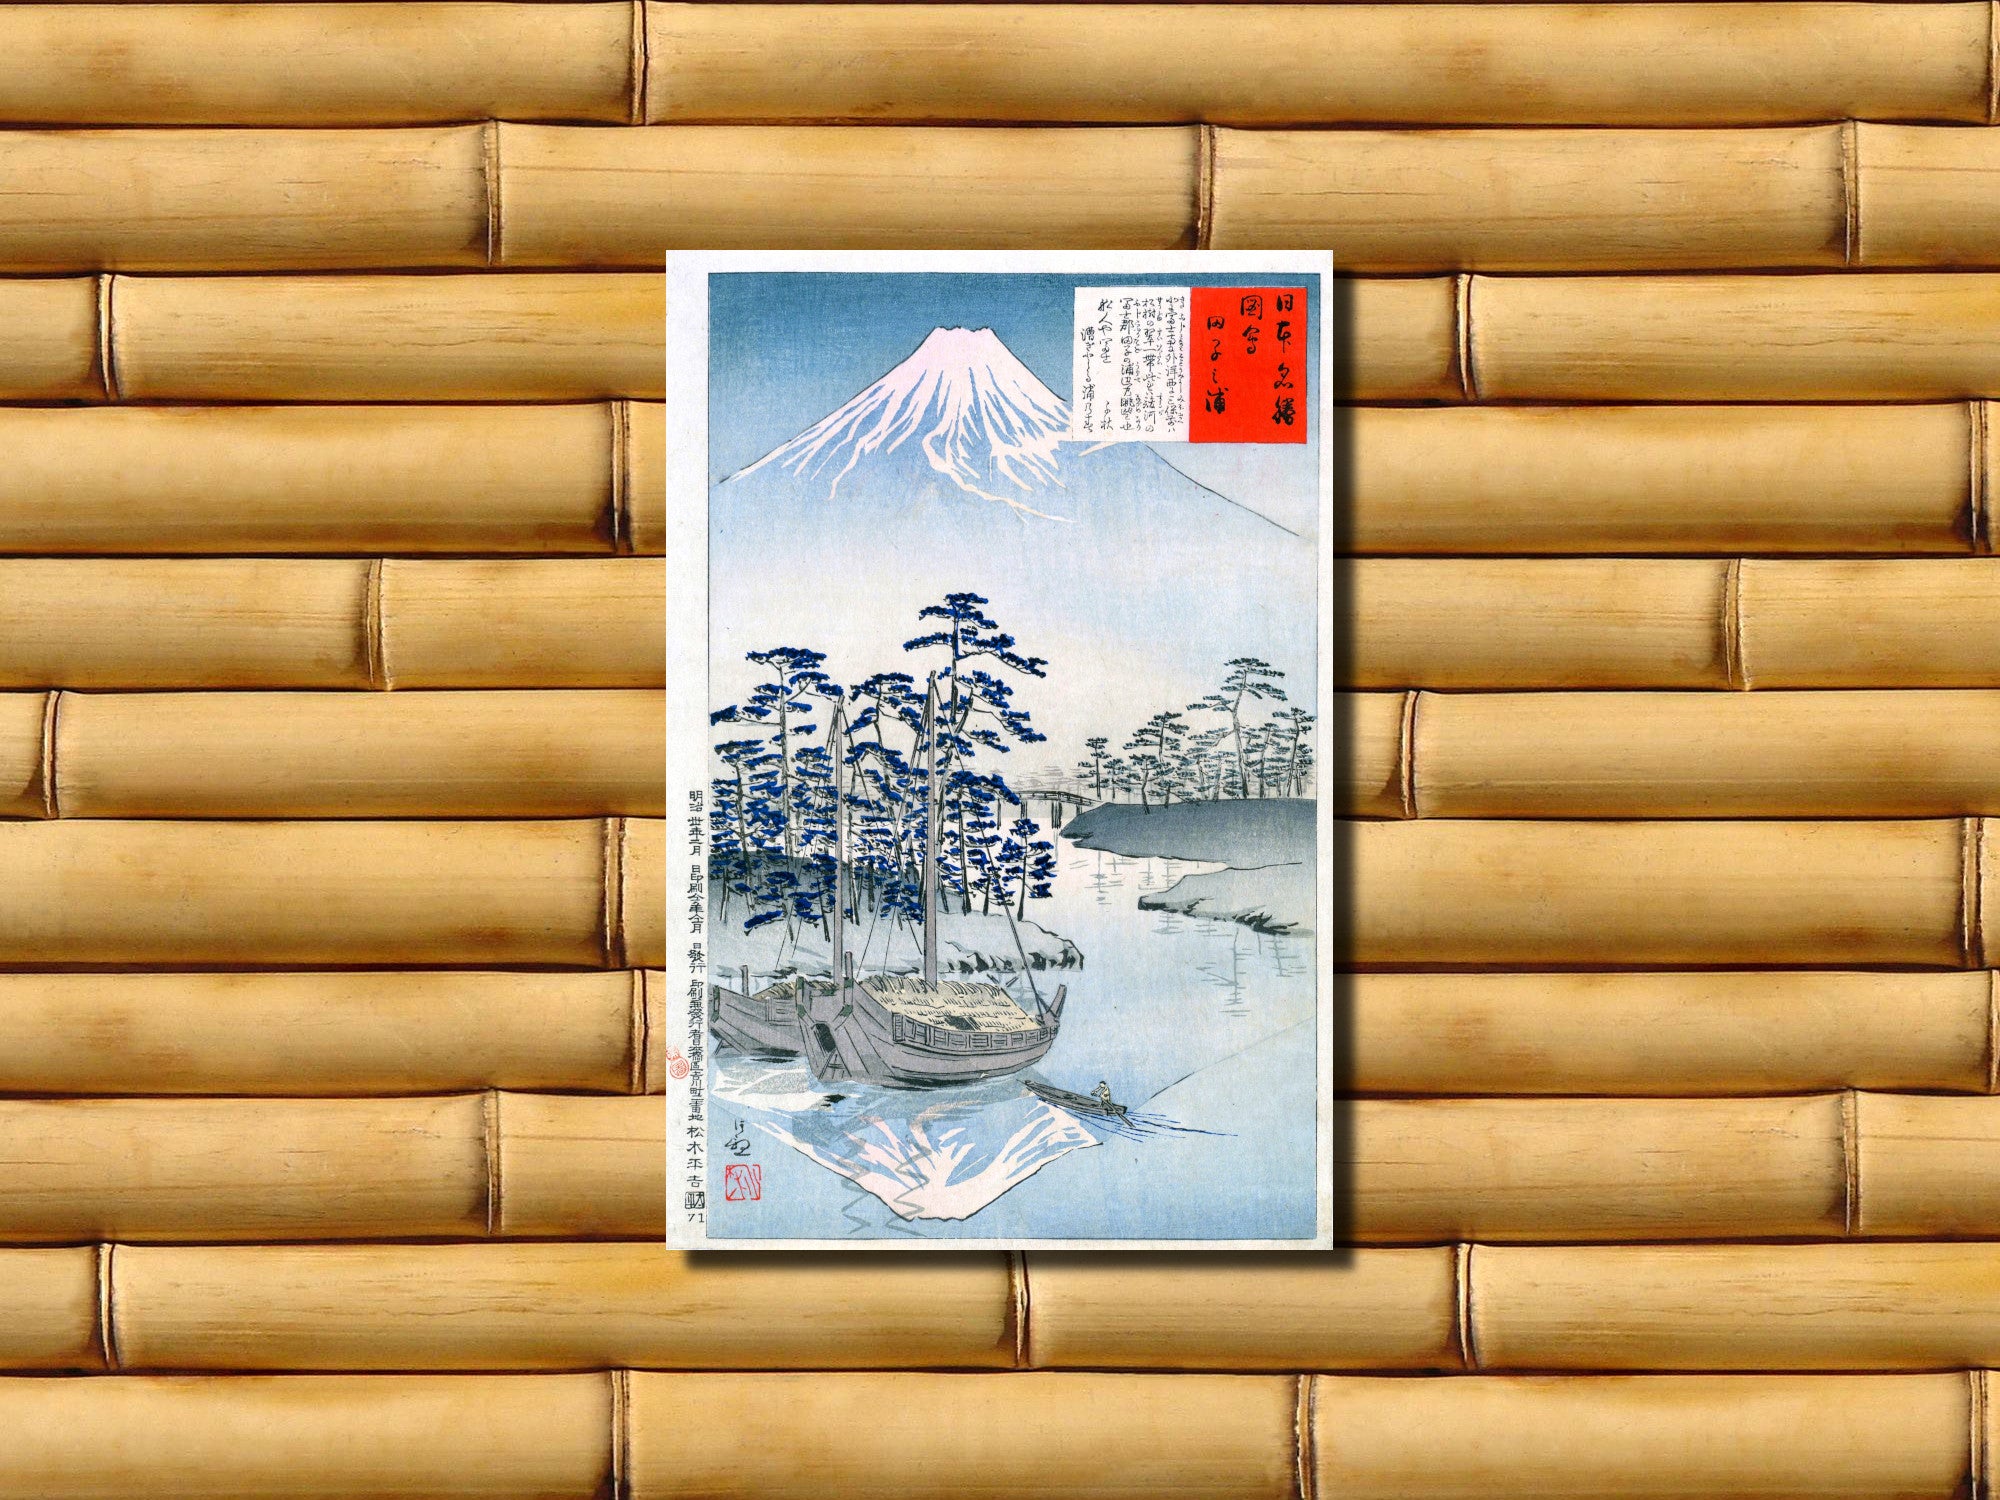 Kobayashi Kiyochika, Japanese Art Print : One Hundred Views of Musashi, 15